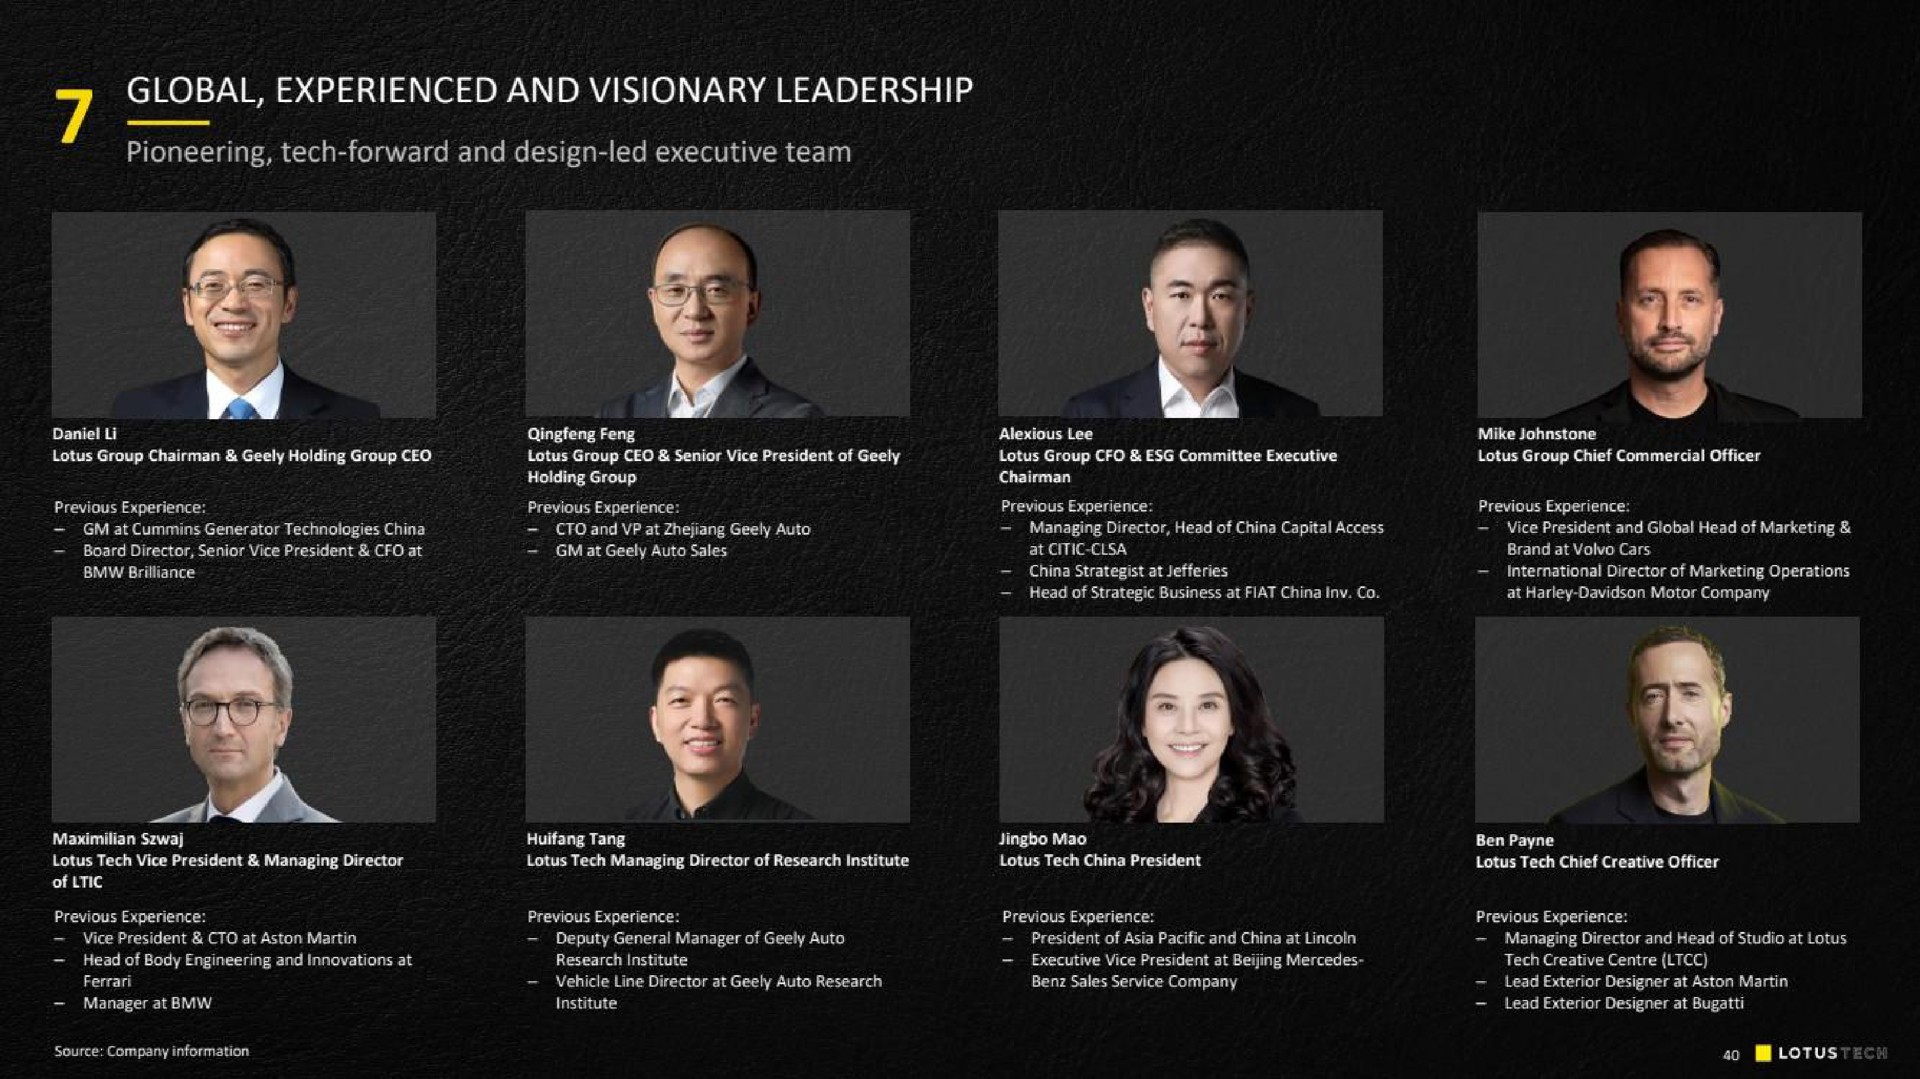 global experienced and visionary leadership | Lotus Cars